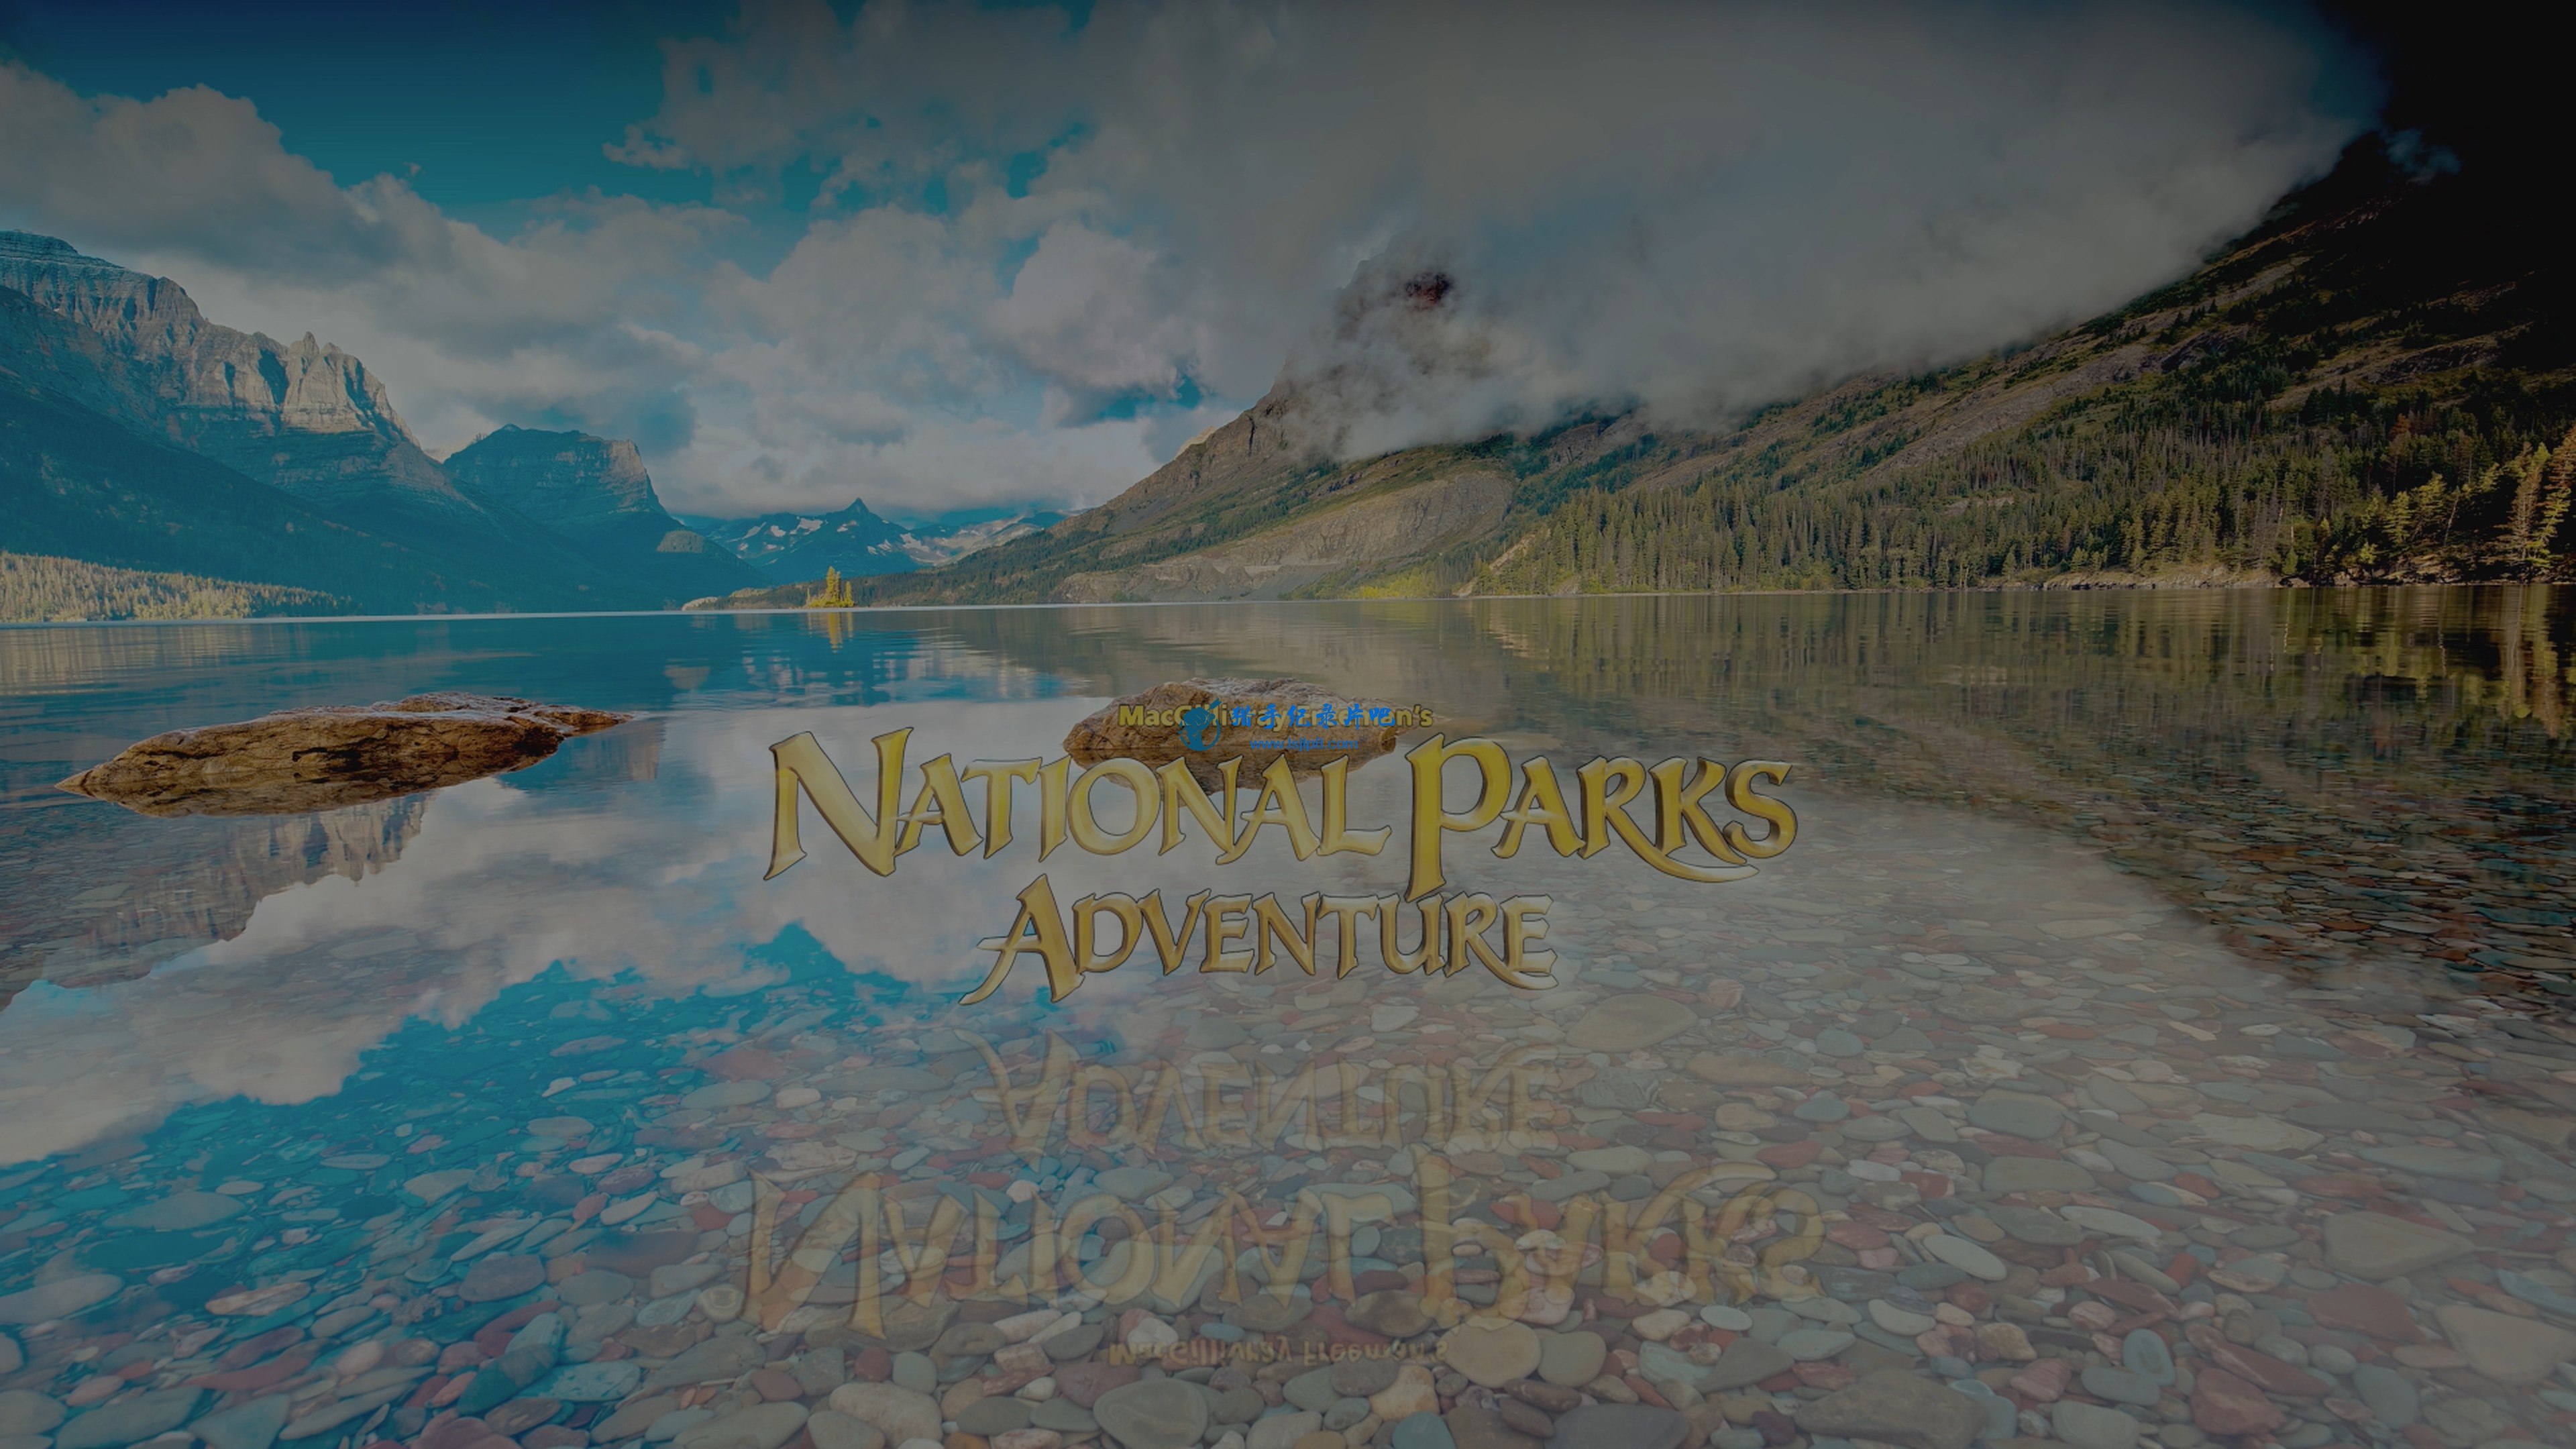 America.Wild.National.Parks.Adventure.2016.DOCU.2160p.BluRay.mkv_20190924_081236.197.jpg